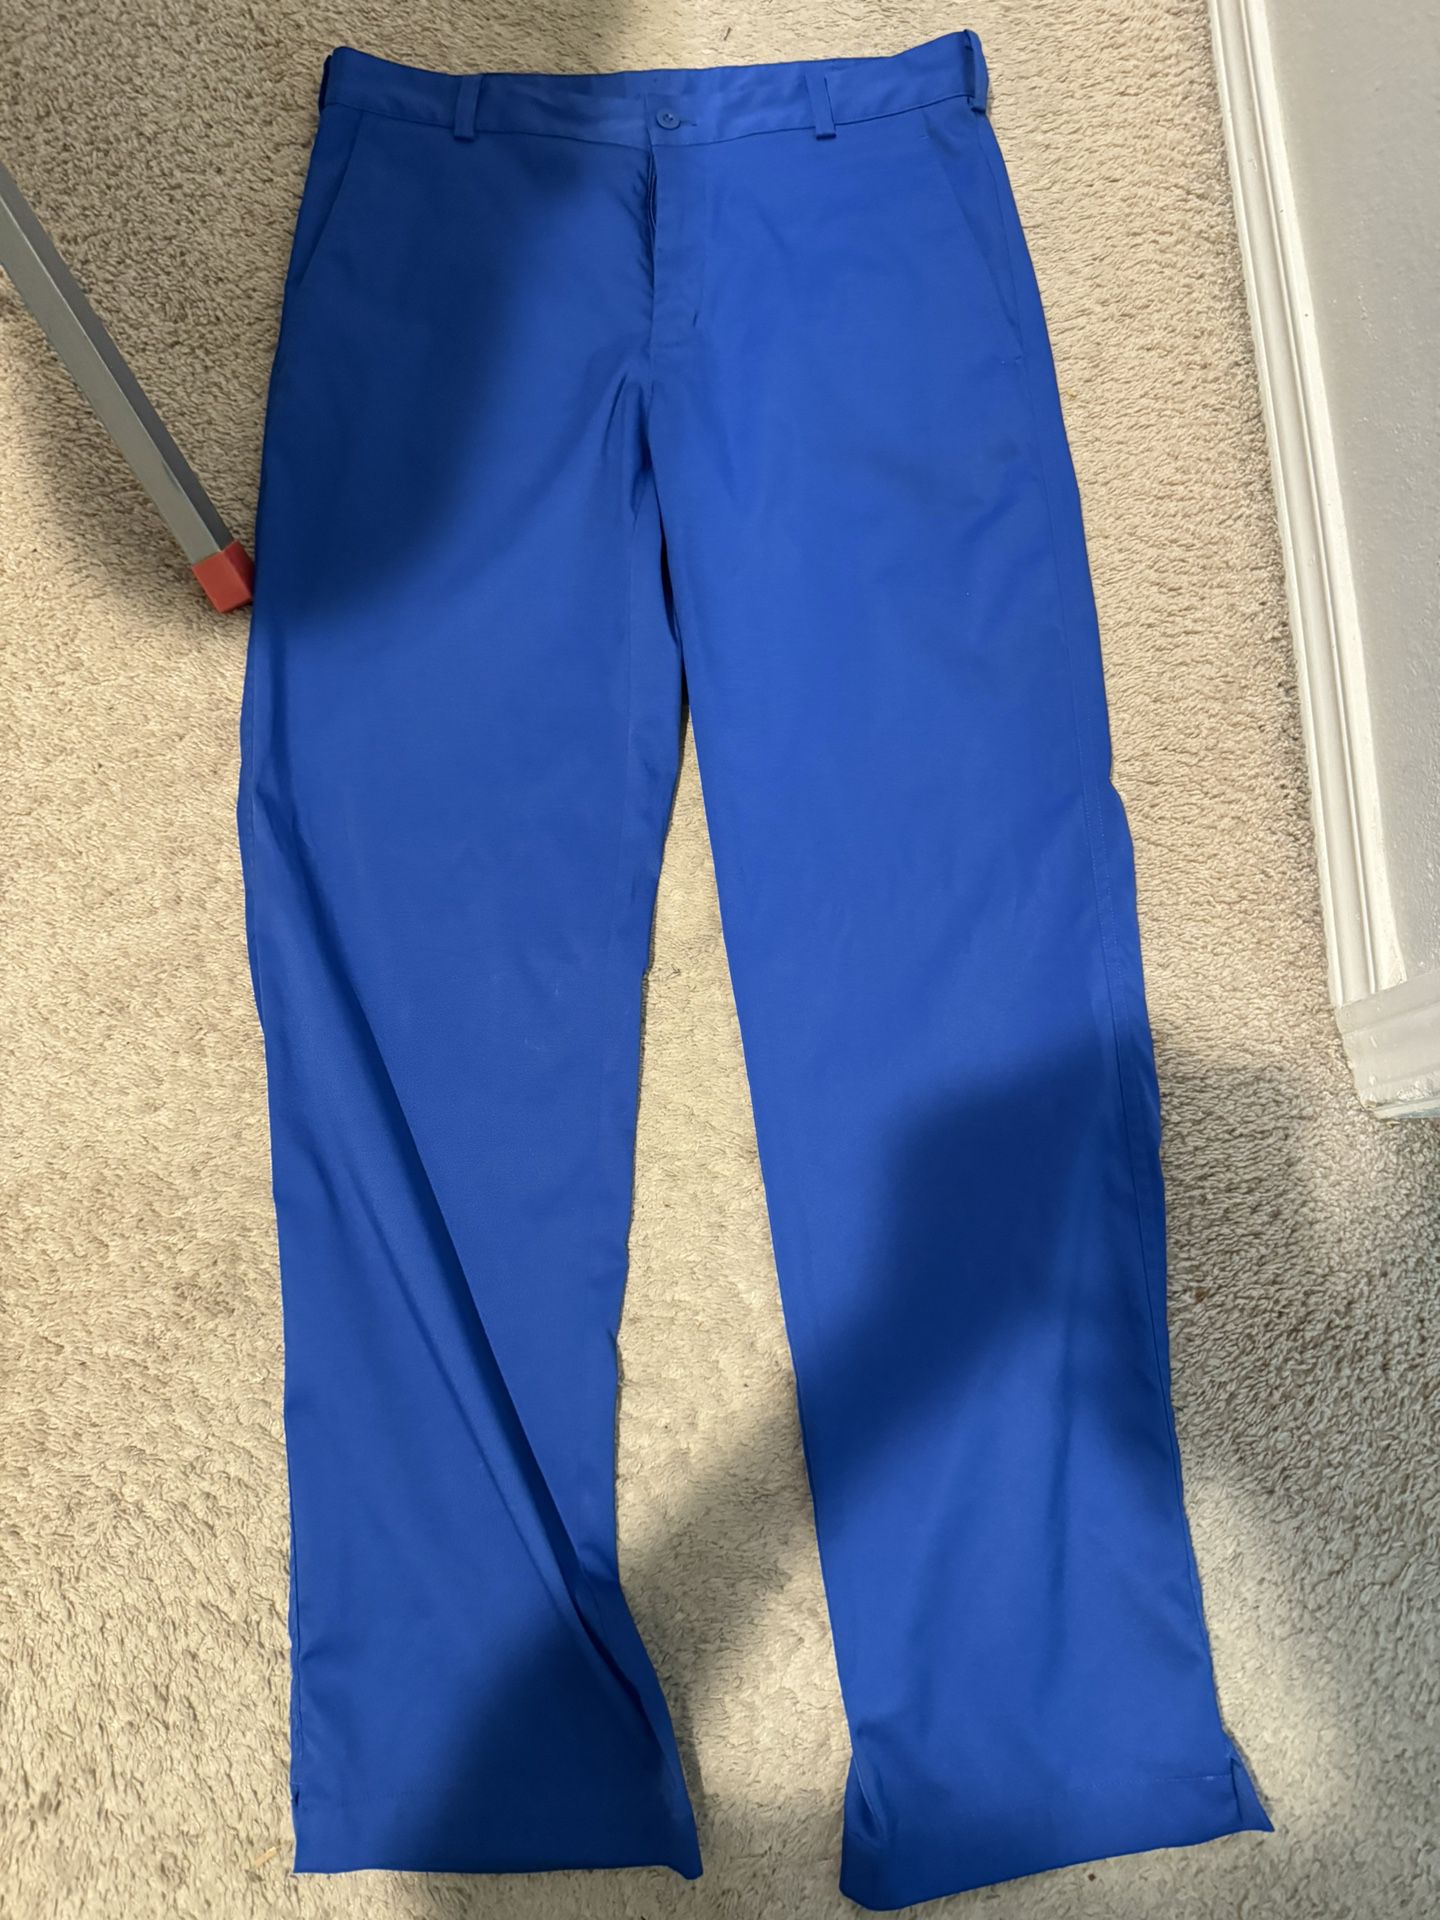 Nike Golf Pants Men’s 32x32